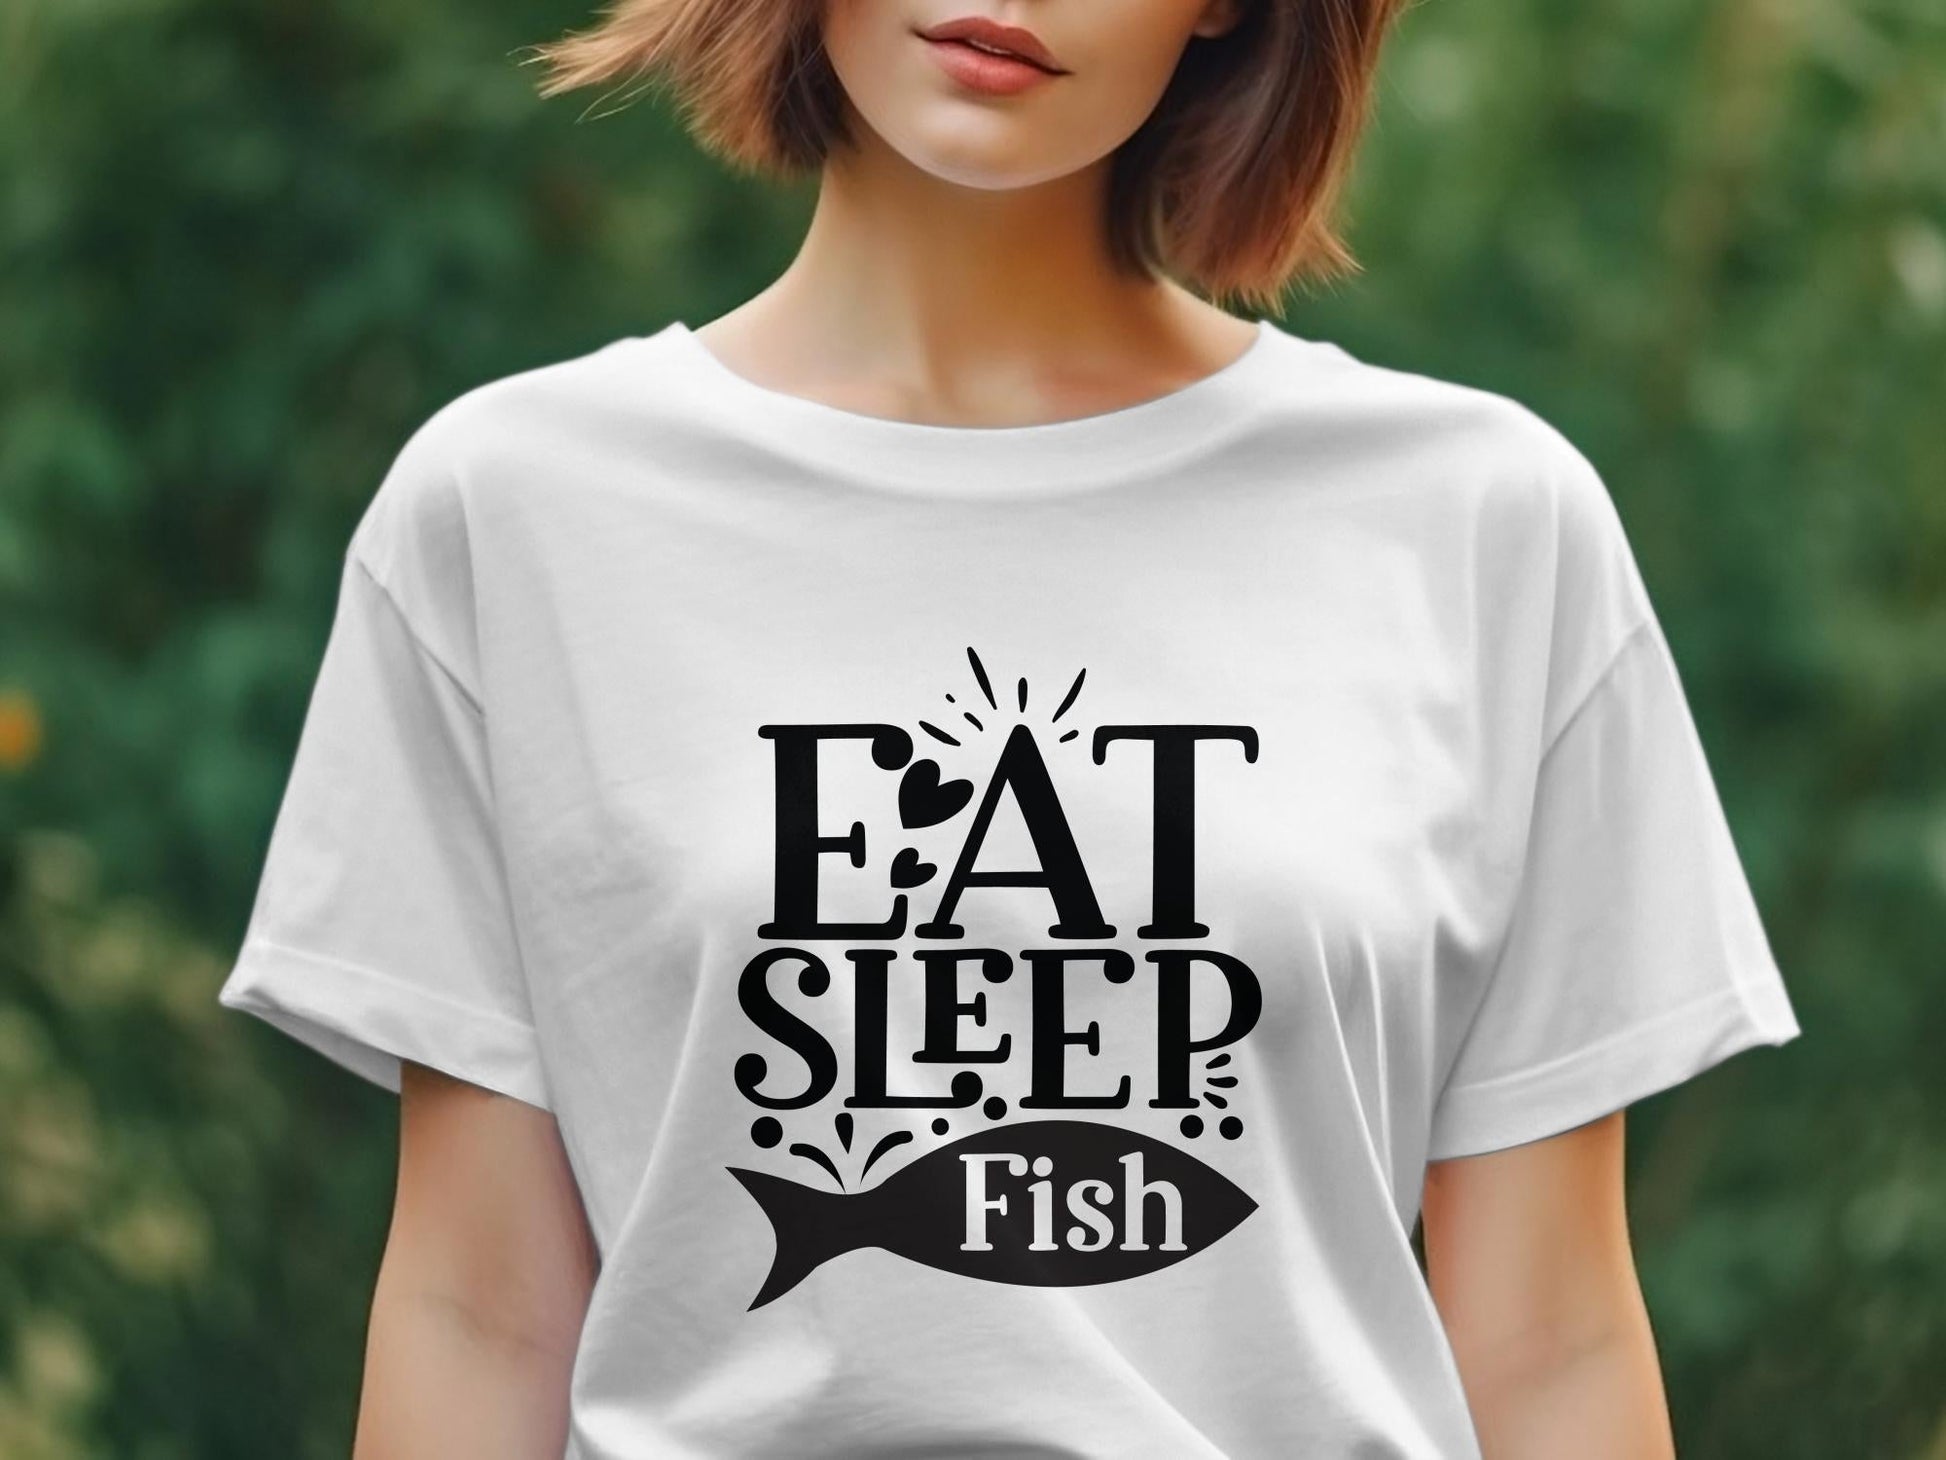 Eat Sleep Fish Women's tee shirt - Premium t-shirt from MyDesigns - Just $19.95! Shop now at Lees Krazy Teez